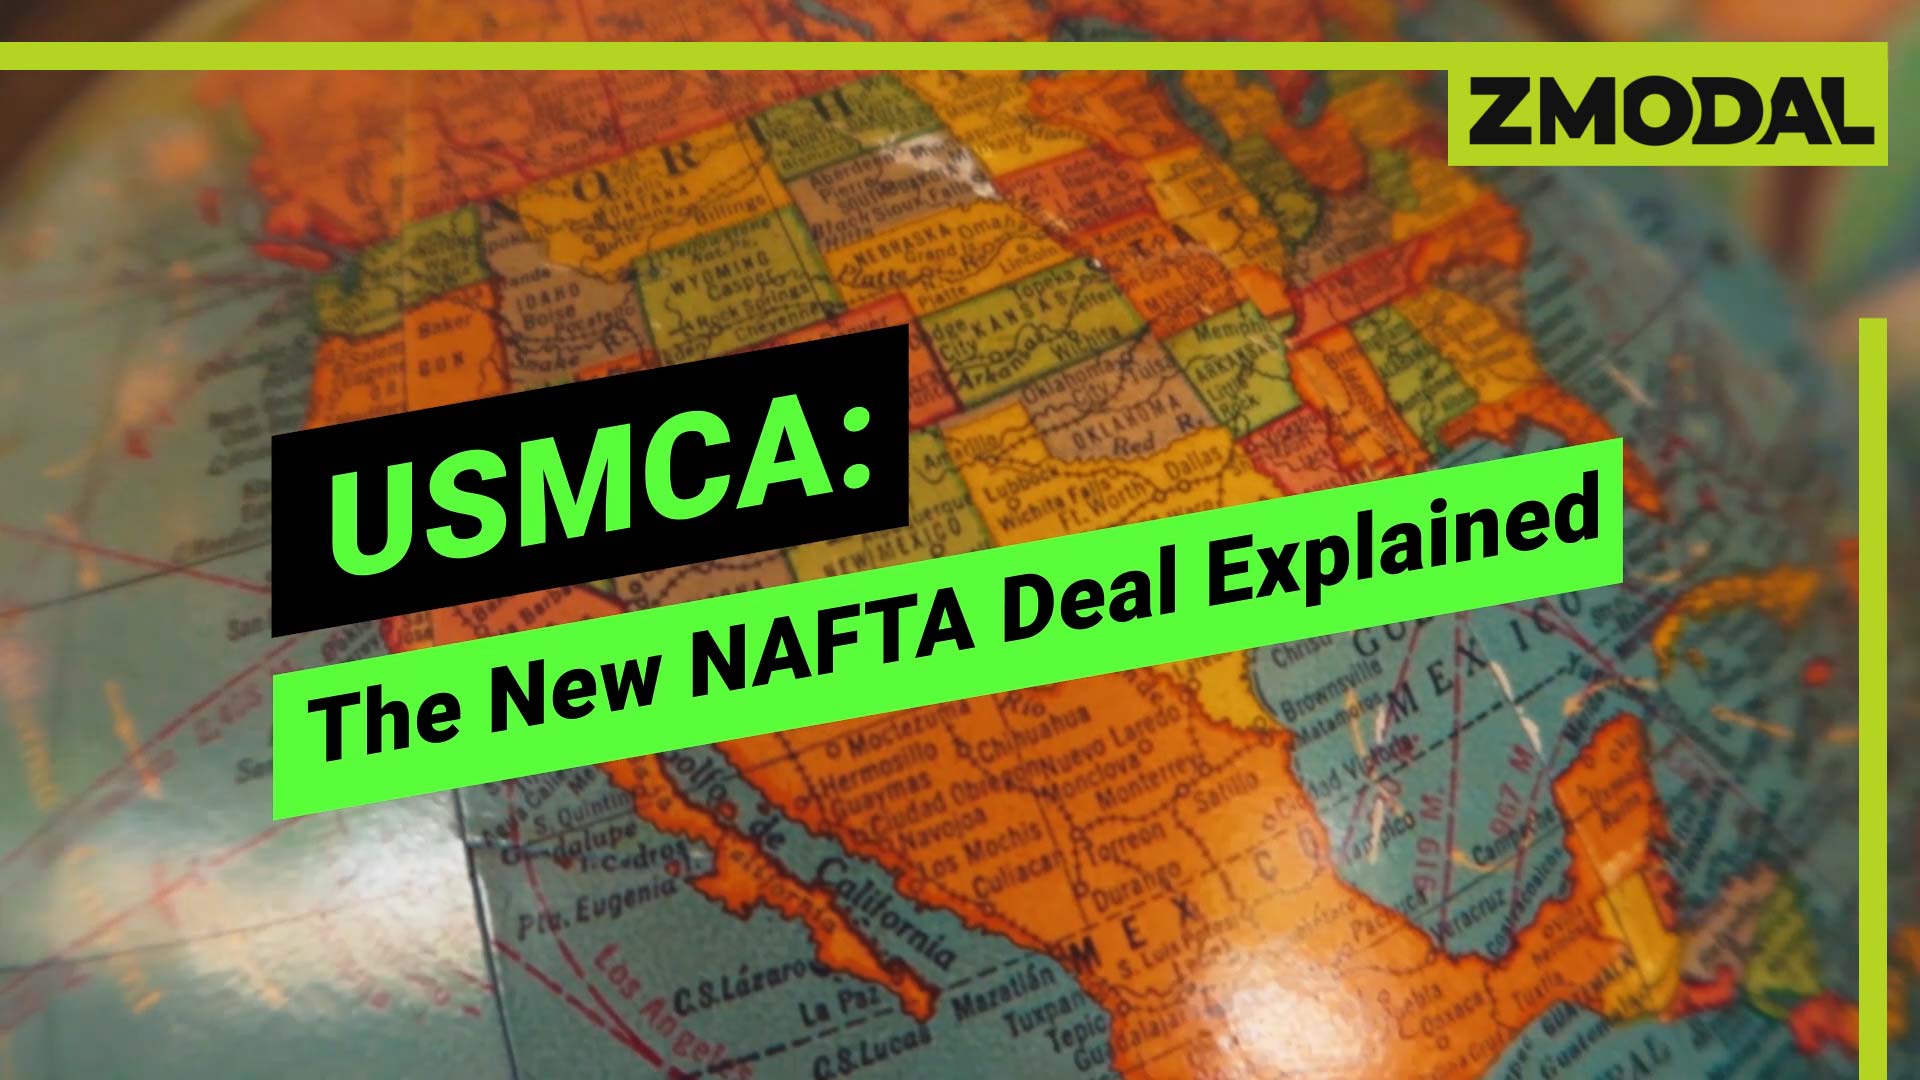 USMCA New NAFTA Deal Explained Zmodal Digital Intermodal Logistics